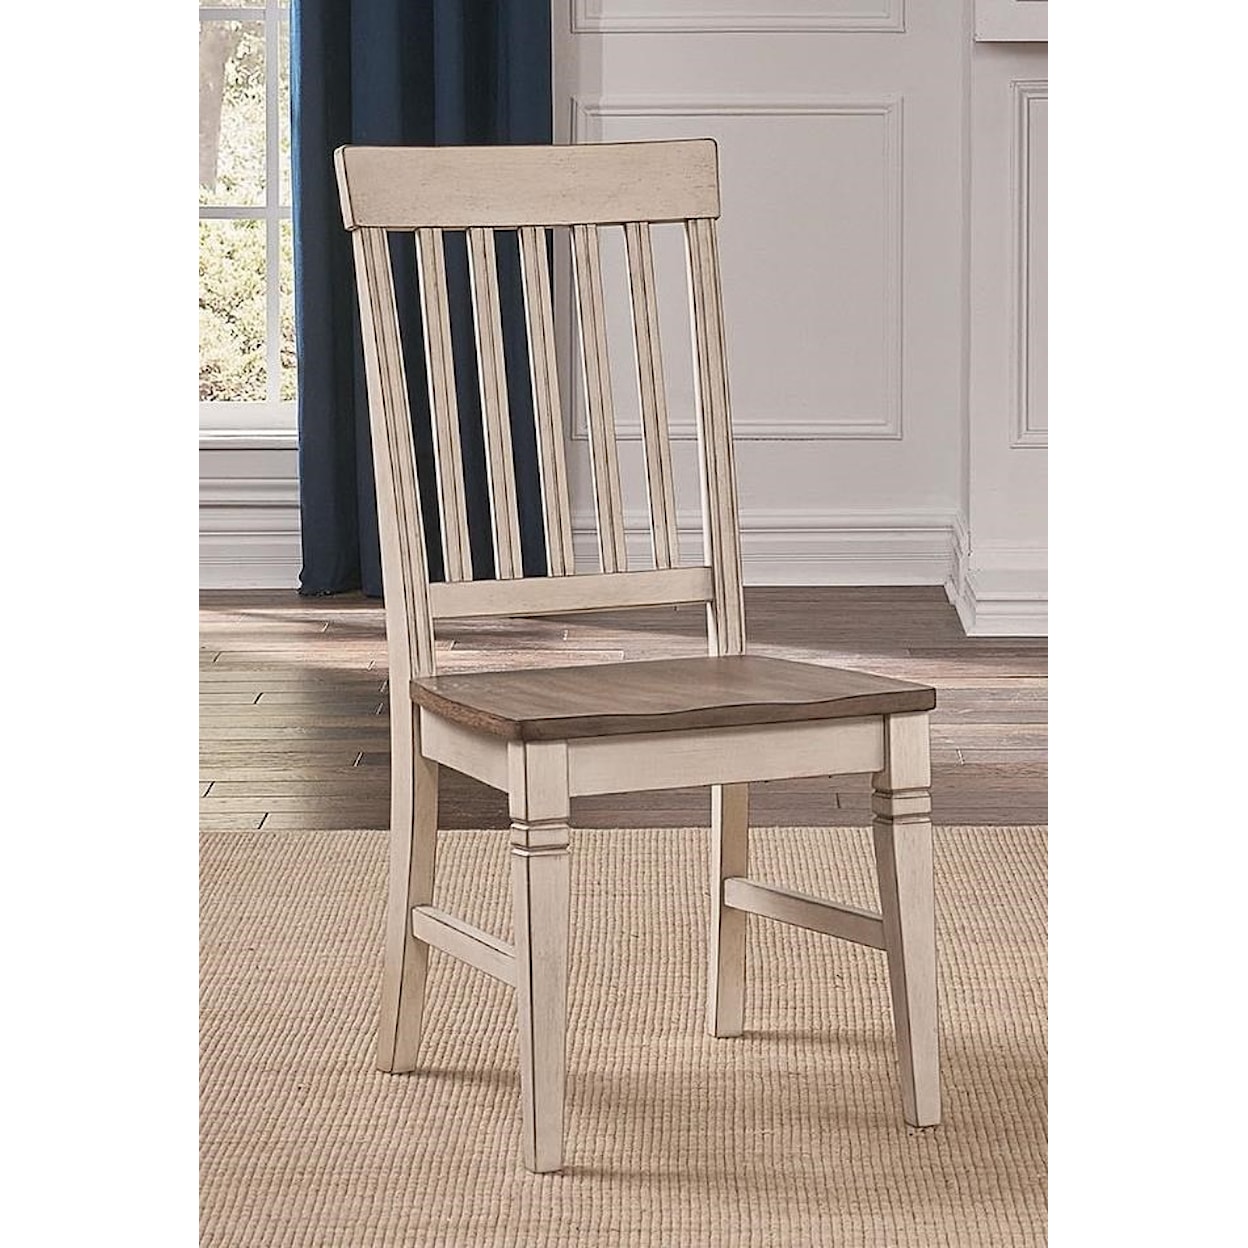 A-A Beacon Slatback Side Chair